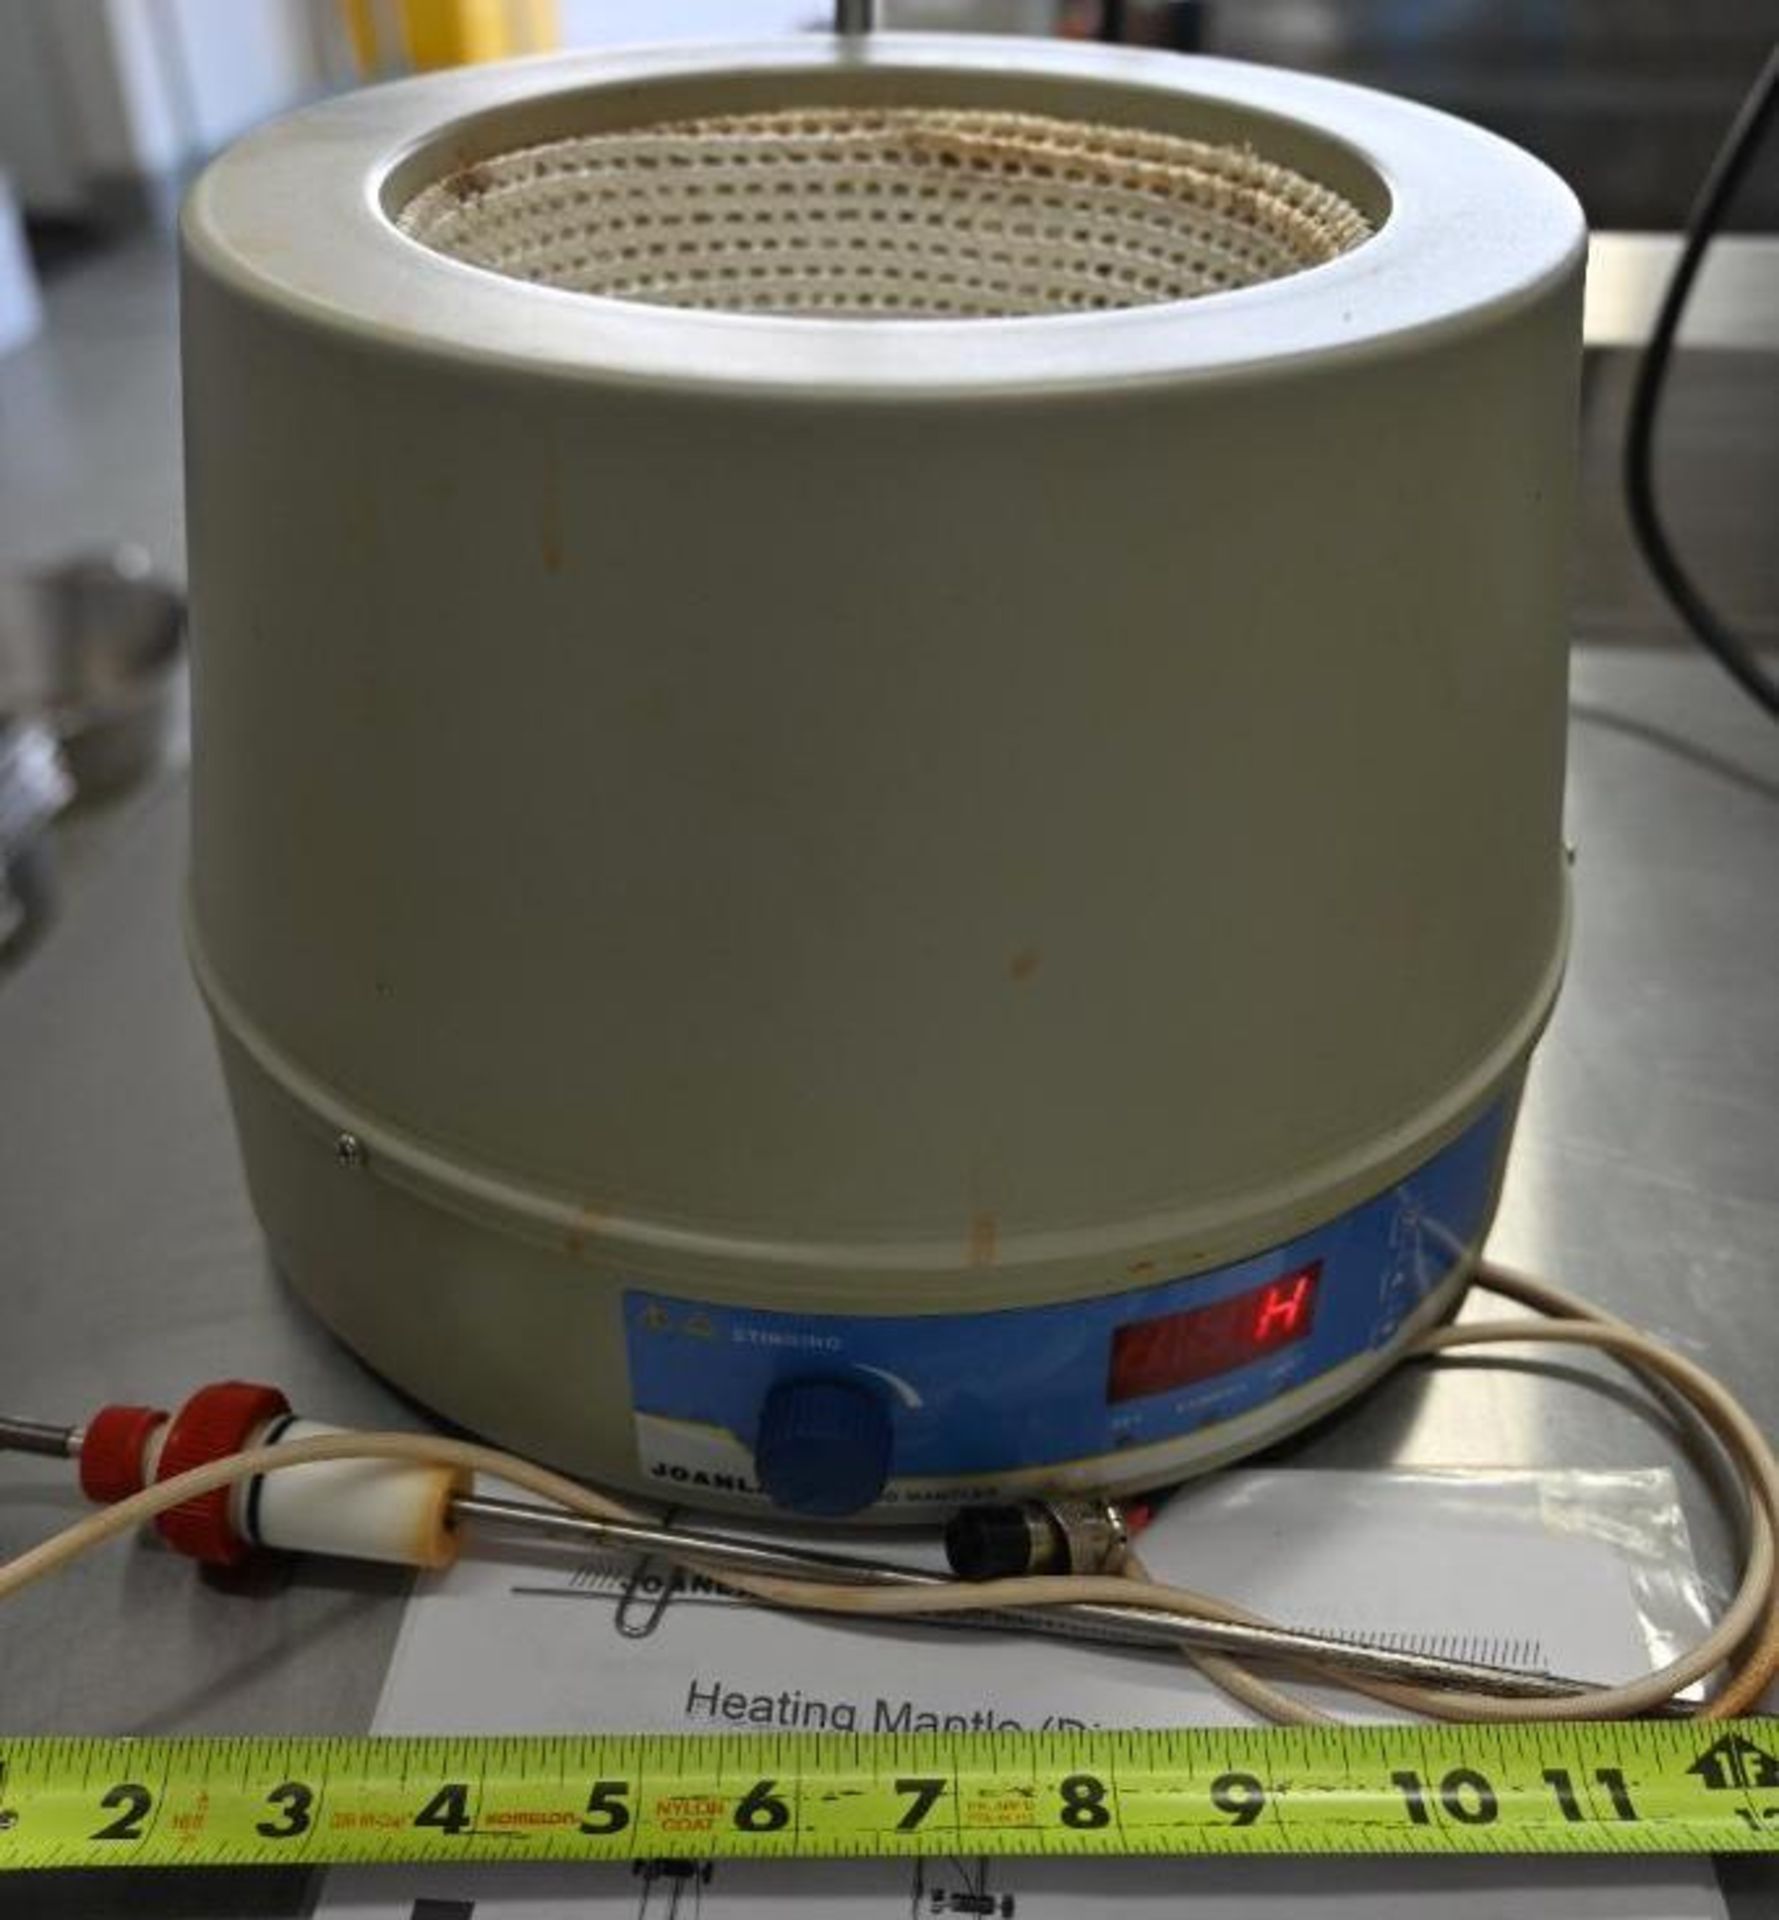 Joan Lab Heating Mantle model HMSC - Image 2 of 7